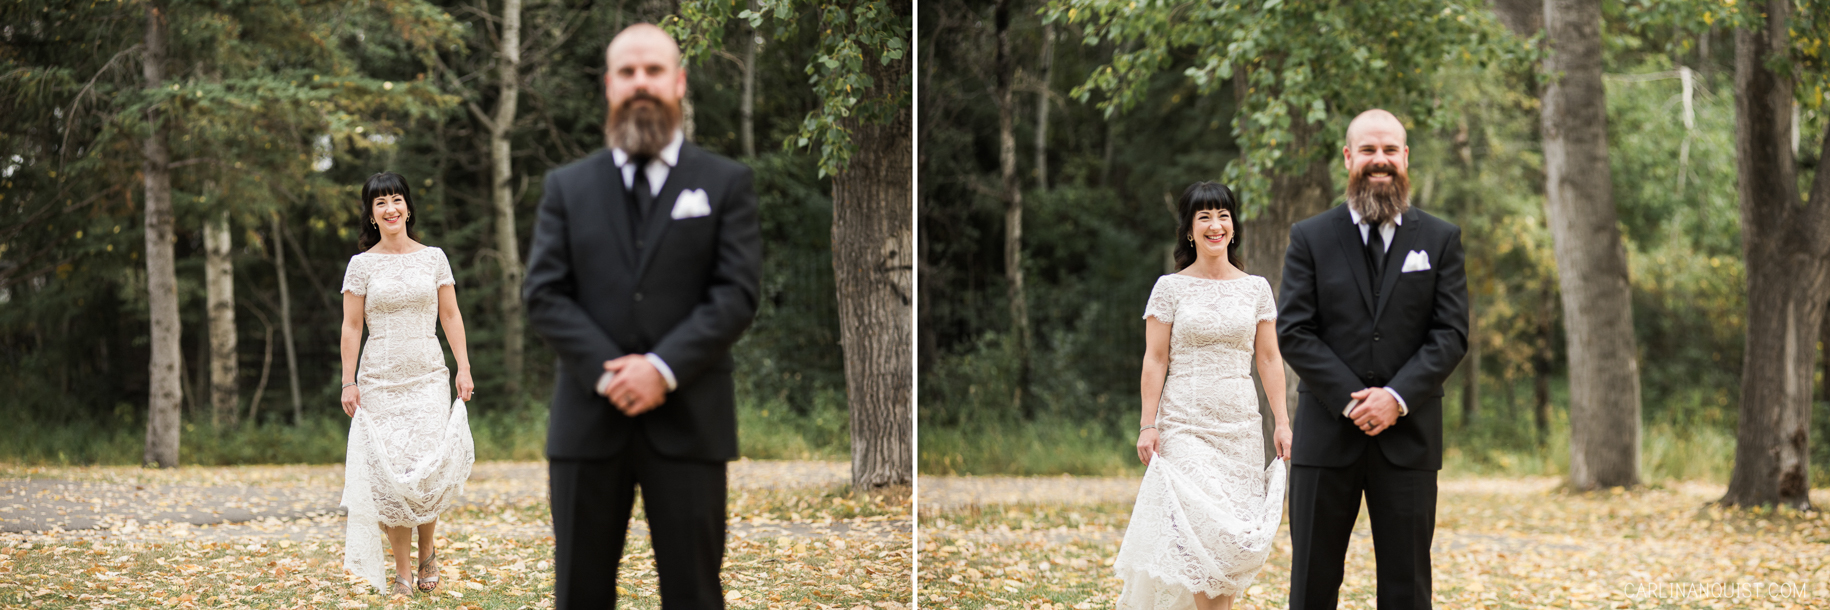 First Look Photos | Calgary Wedding Photographers